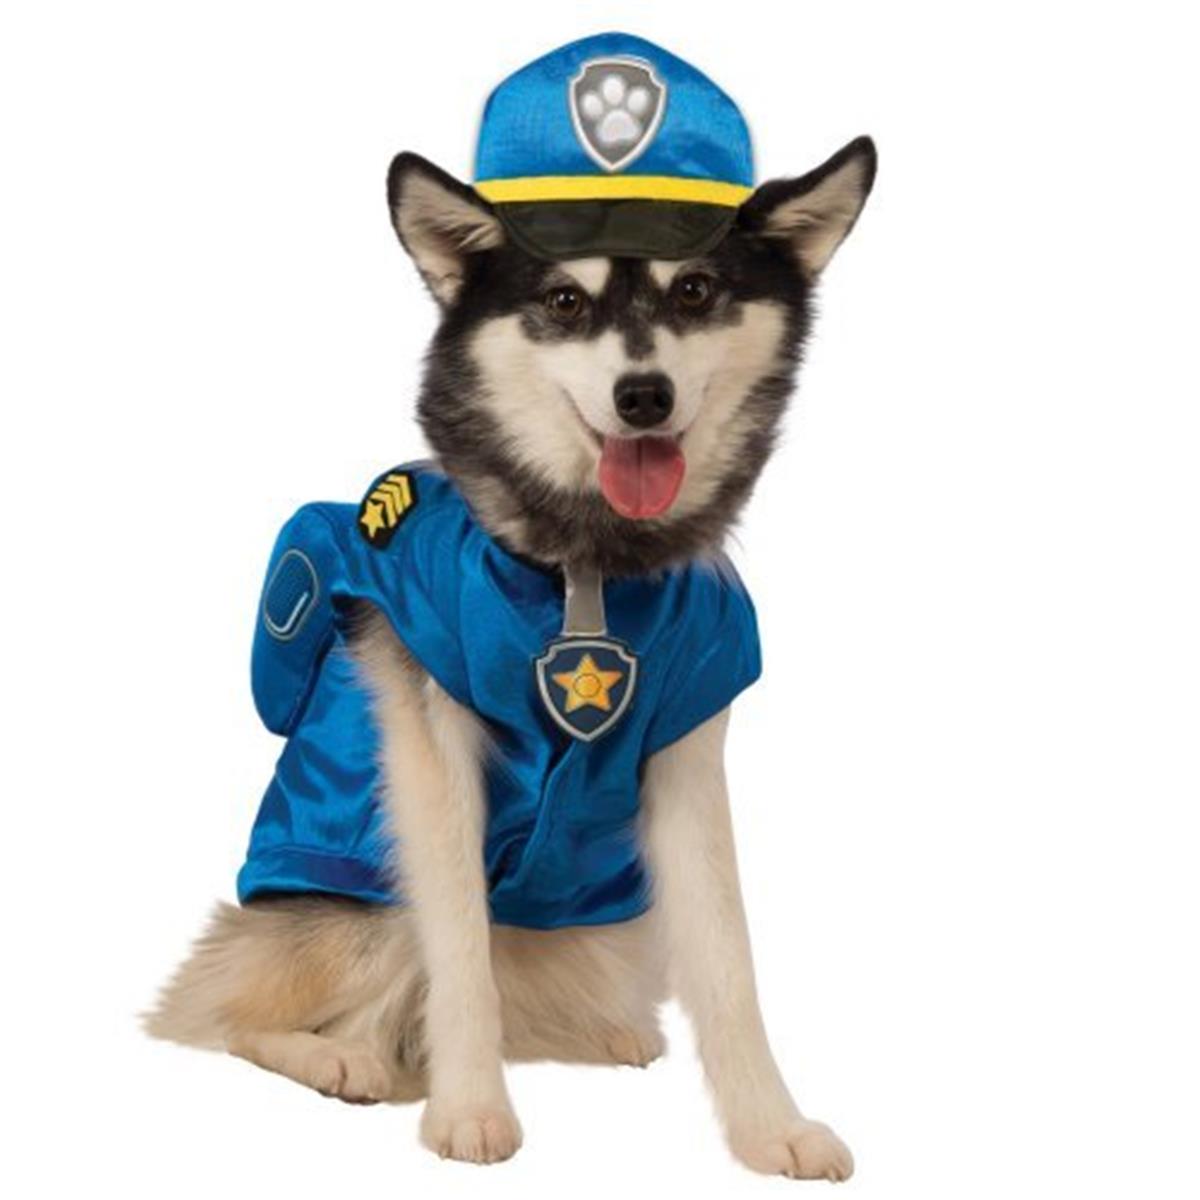 245921 Paw Patrol Chase Pet Costume